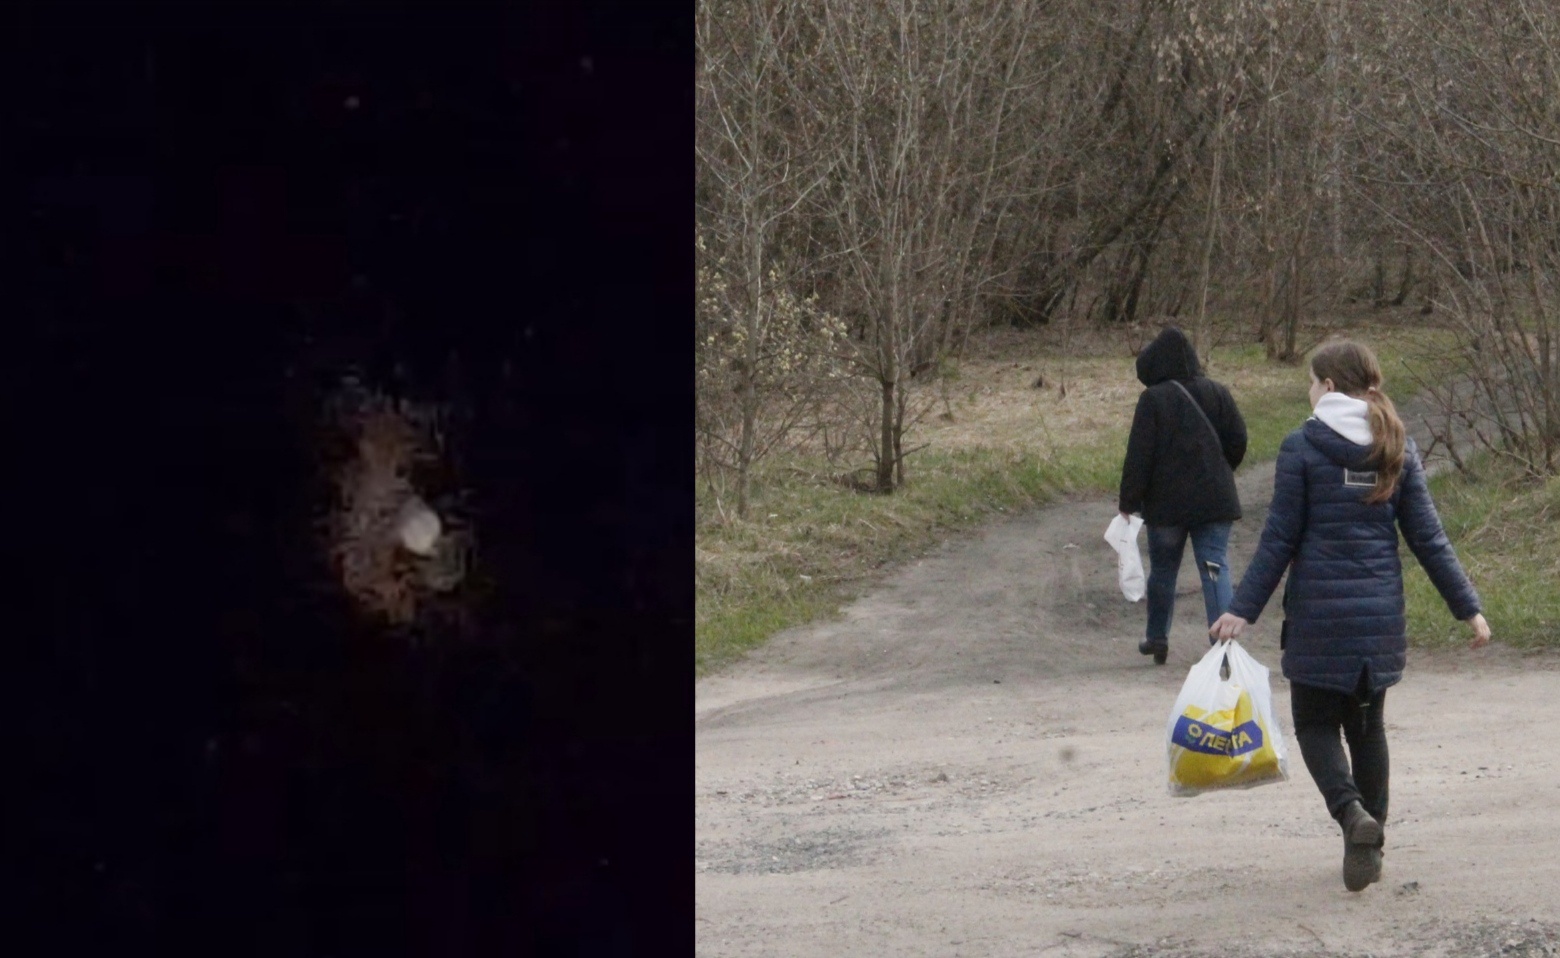  Жители Углича приняли запуск ракеты за метеорит 